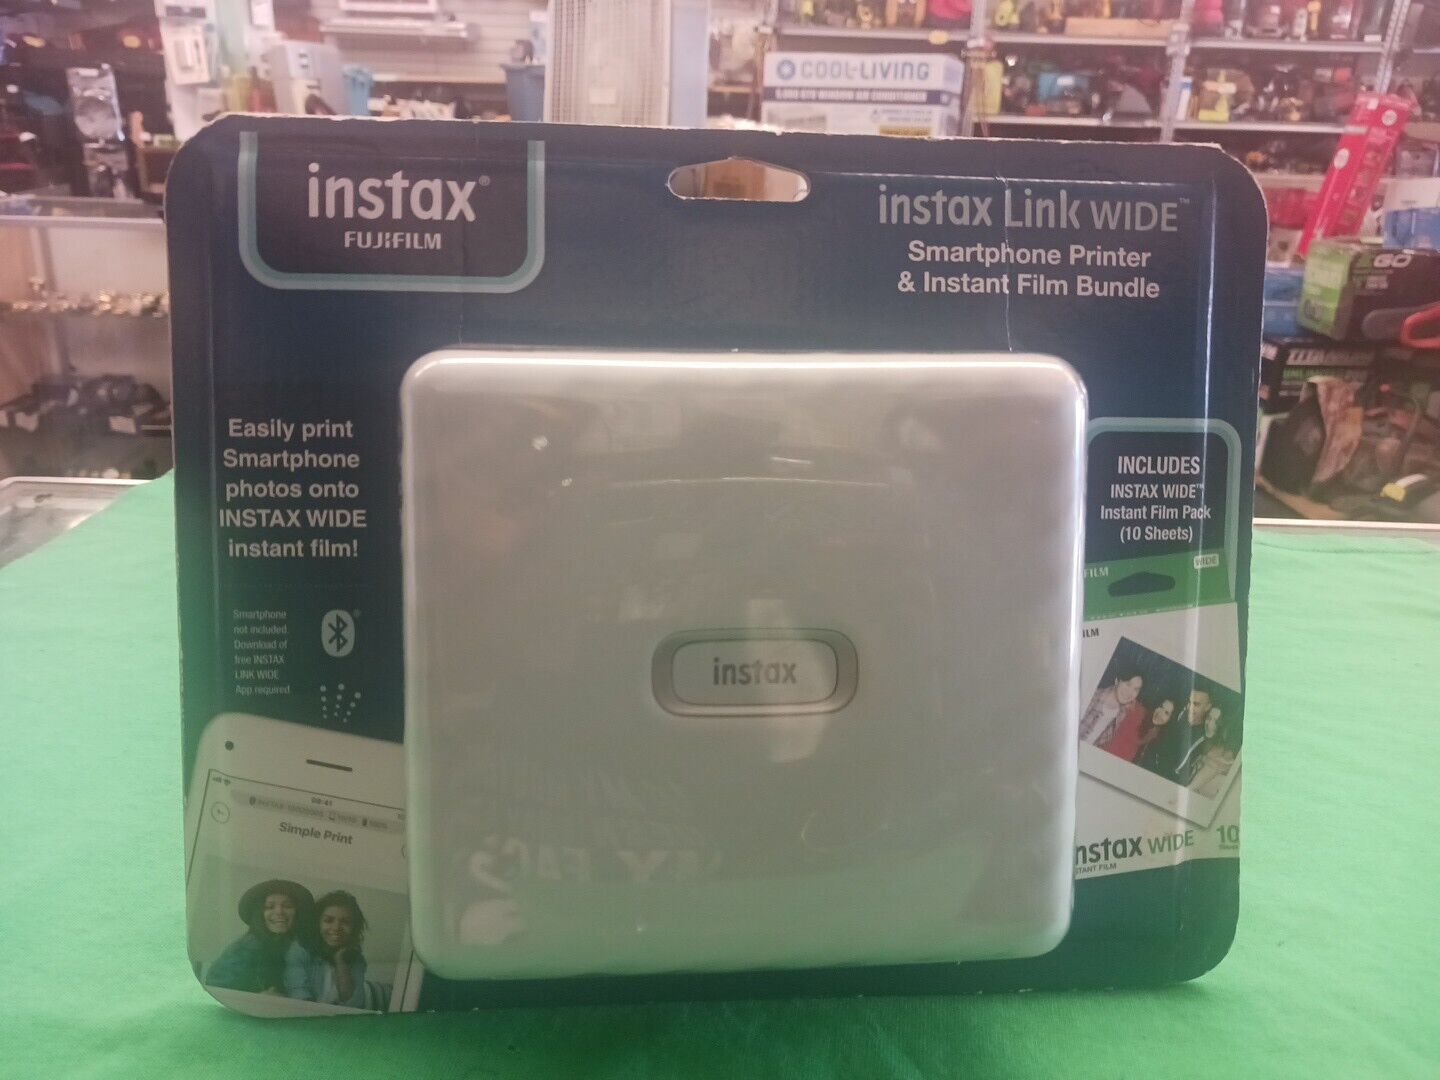 FuljiFilm INSTAX LINK WIDE Smartphone Printer & Instant Film Bundle - White NEW